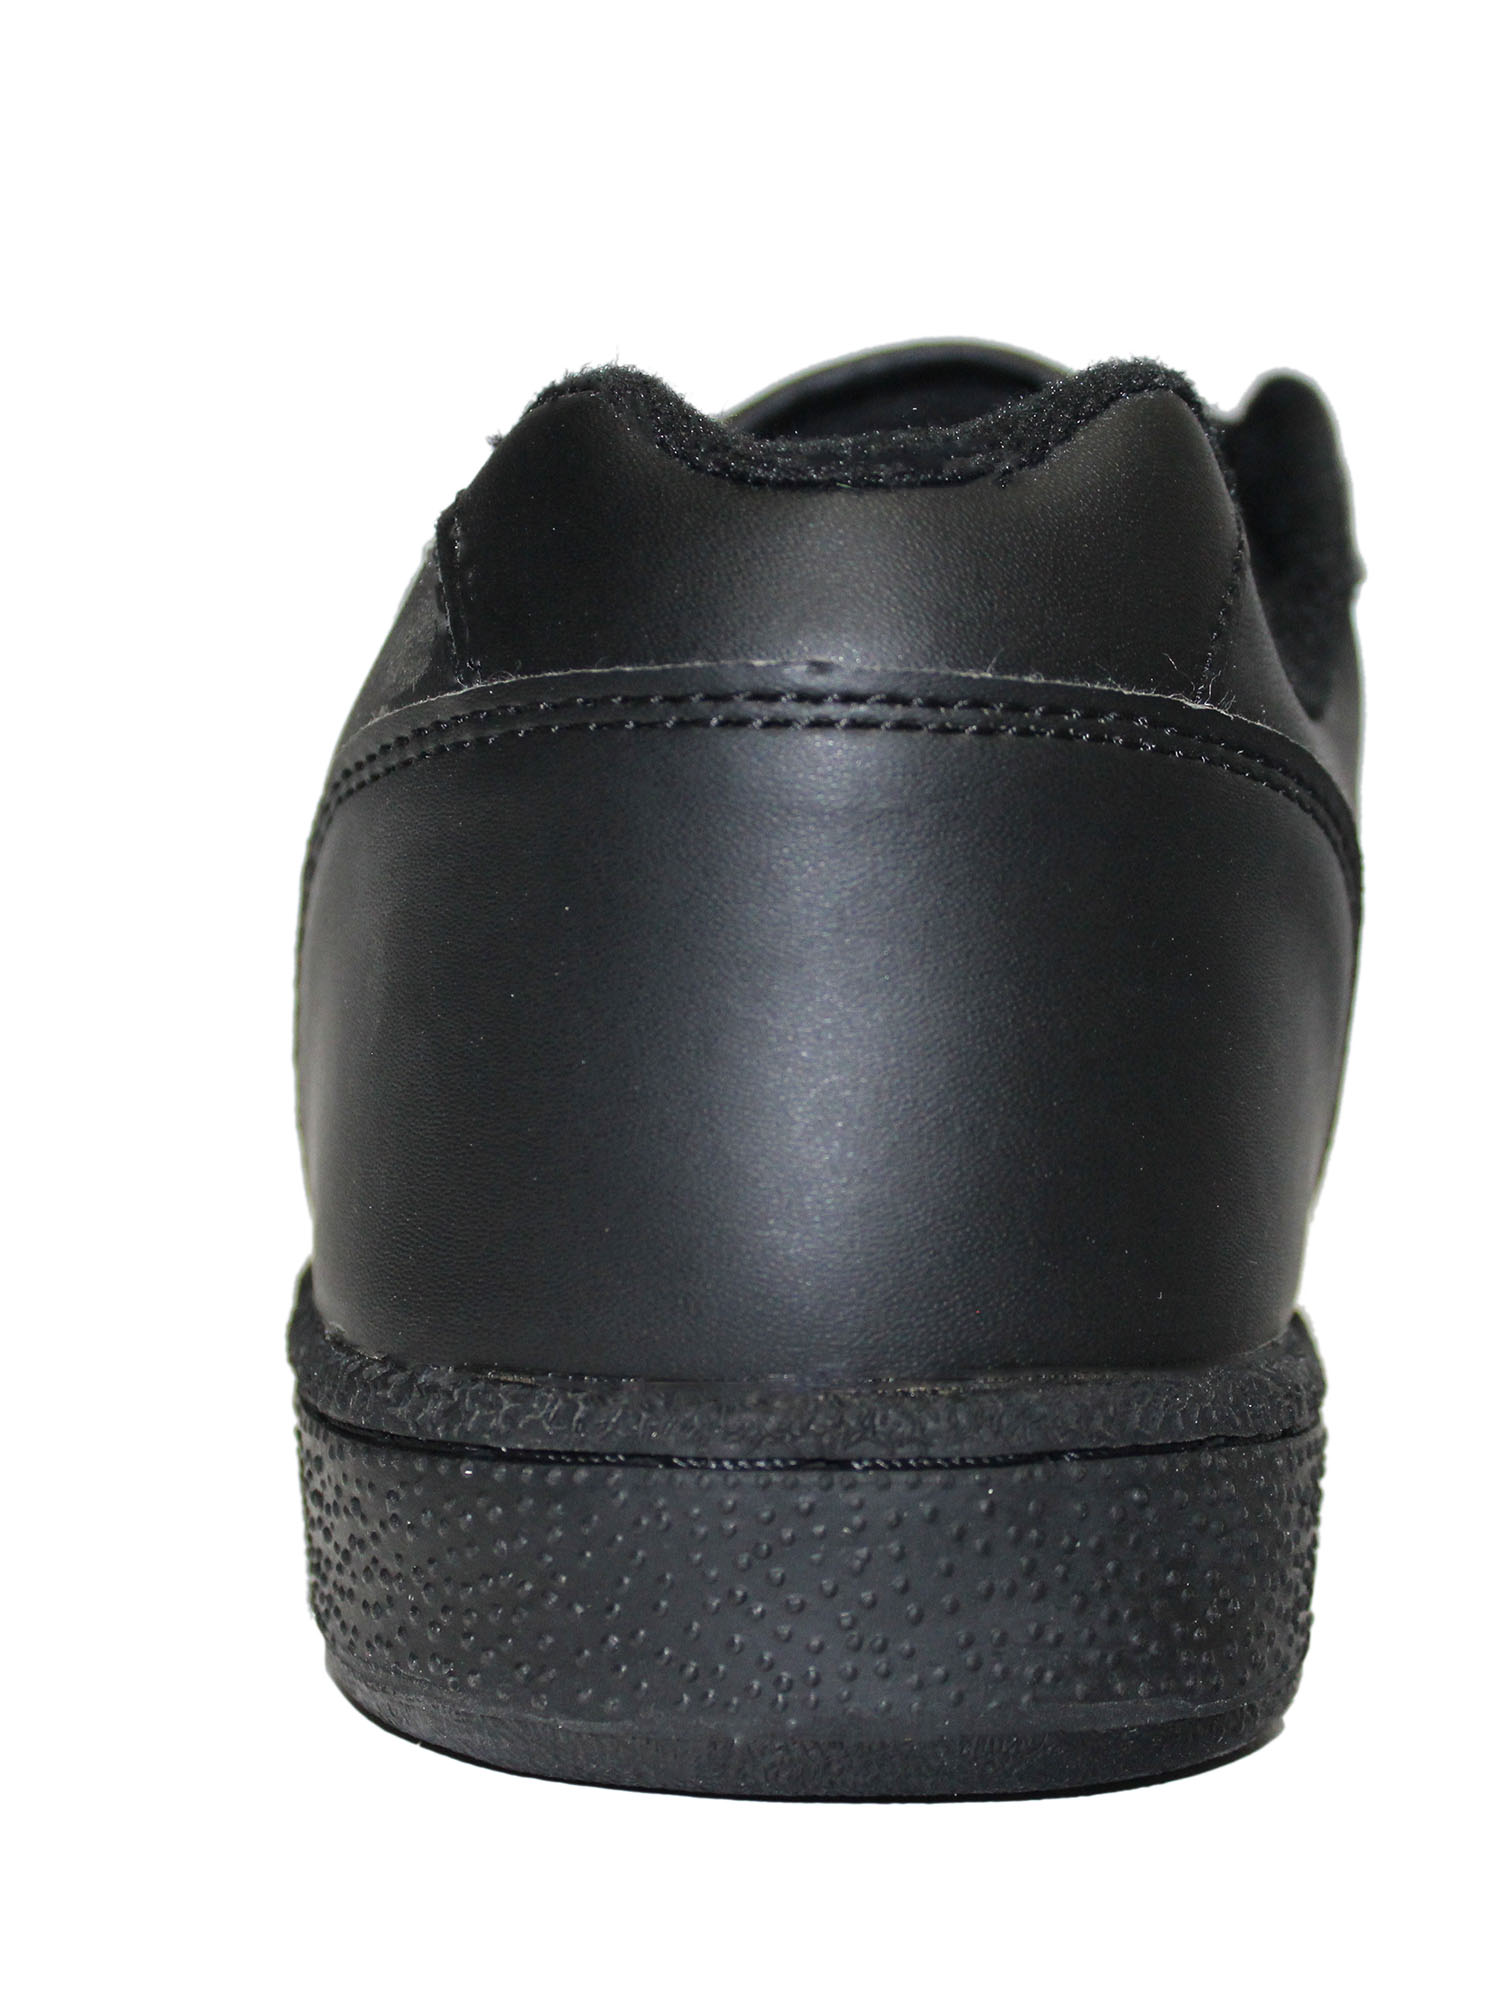 Tanleewa Men's Leather Strap Sneakers Lightweight Hook and Loop Walking Shoe Size 5 Adult Male - image 4 of 4